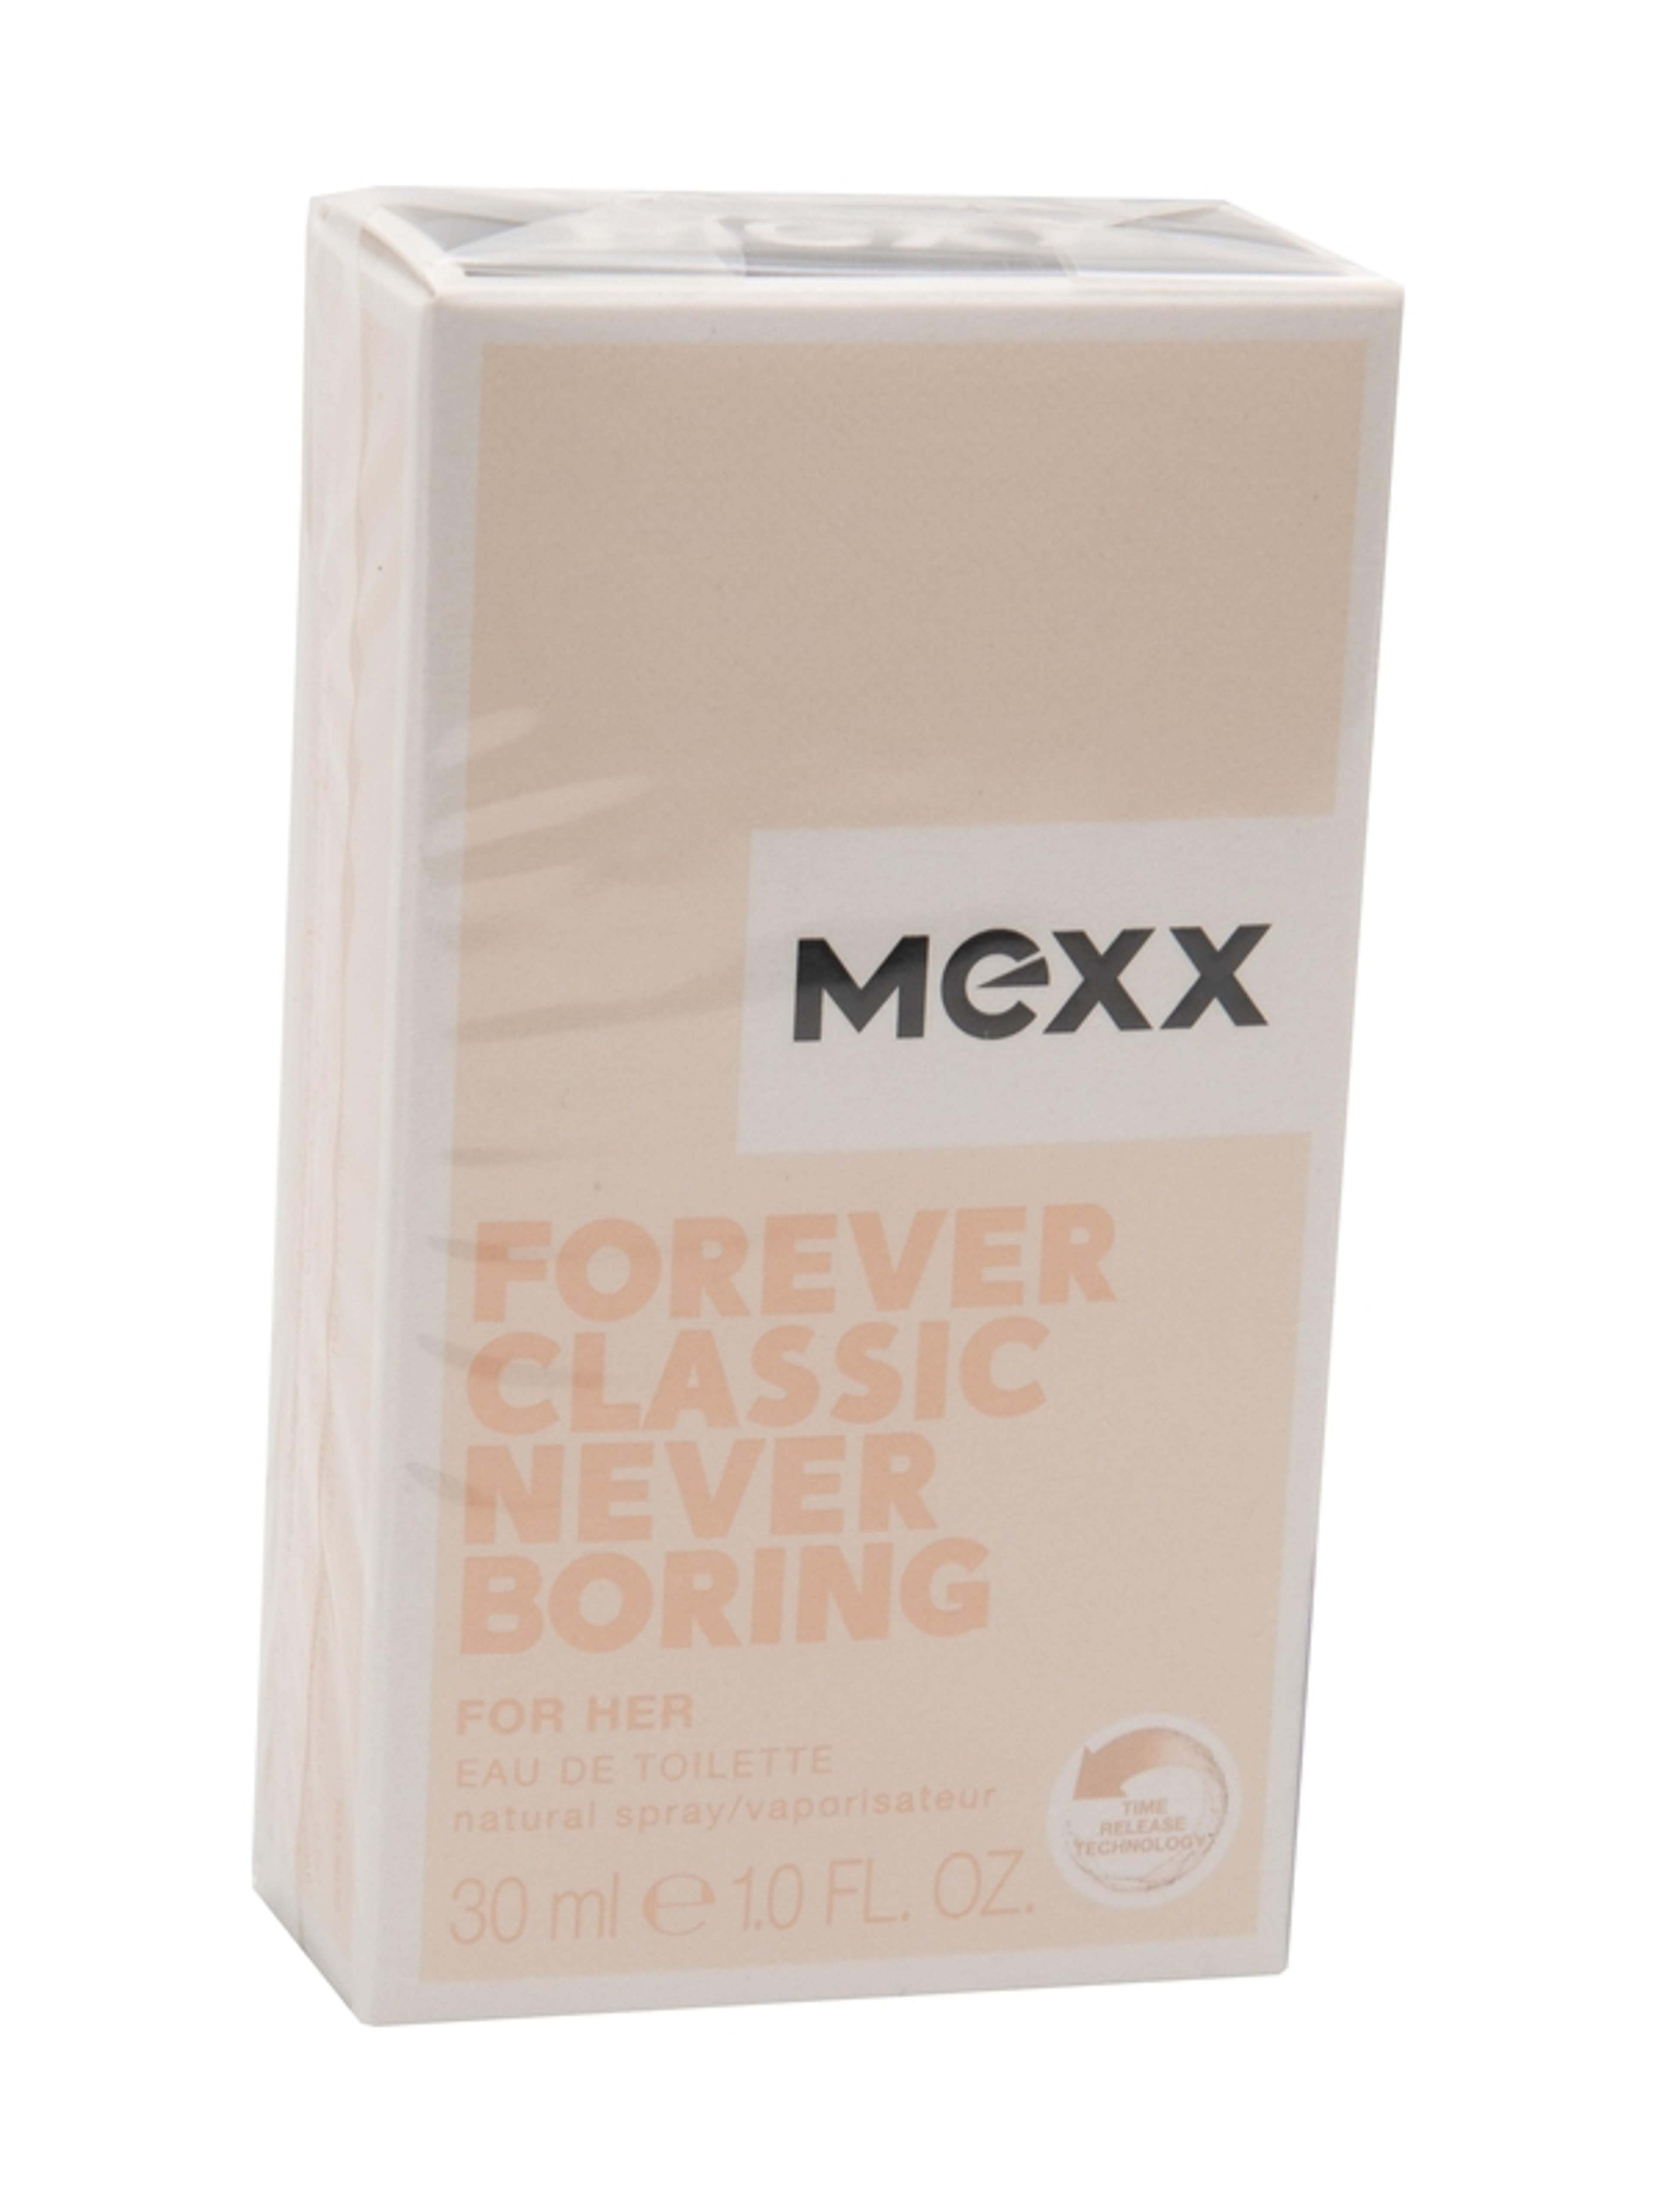 Mexx Forever Classic Never Boring női Eau de Toilette - 30 ml